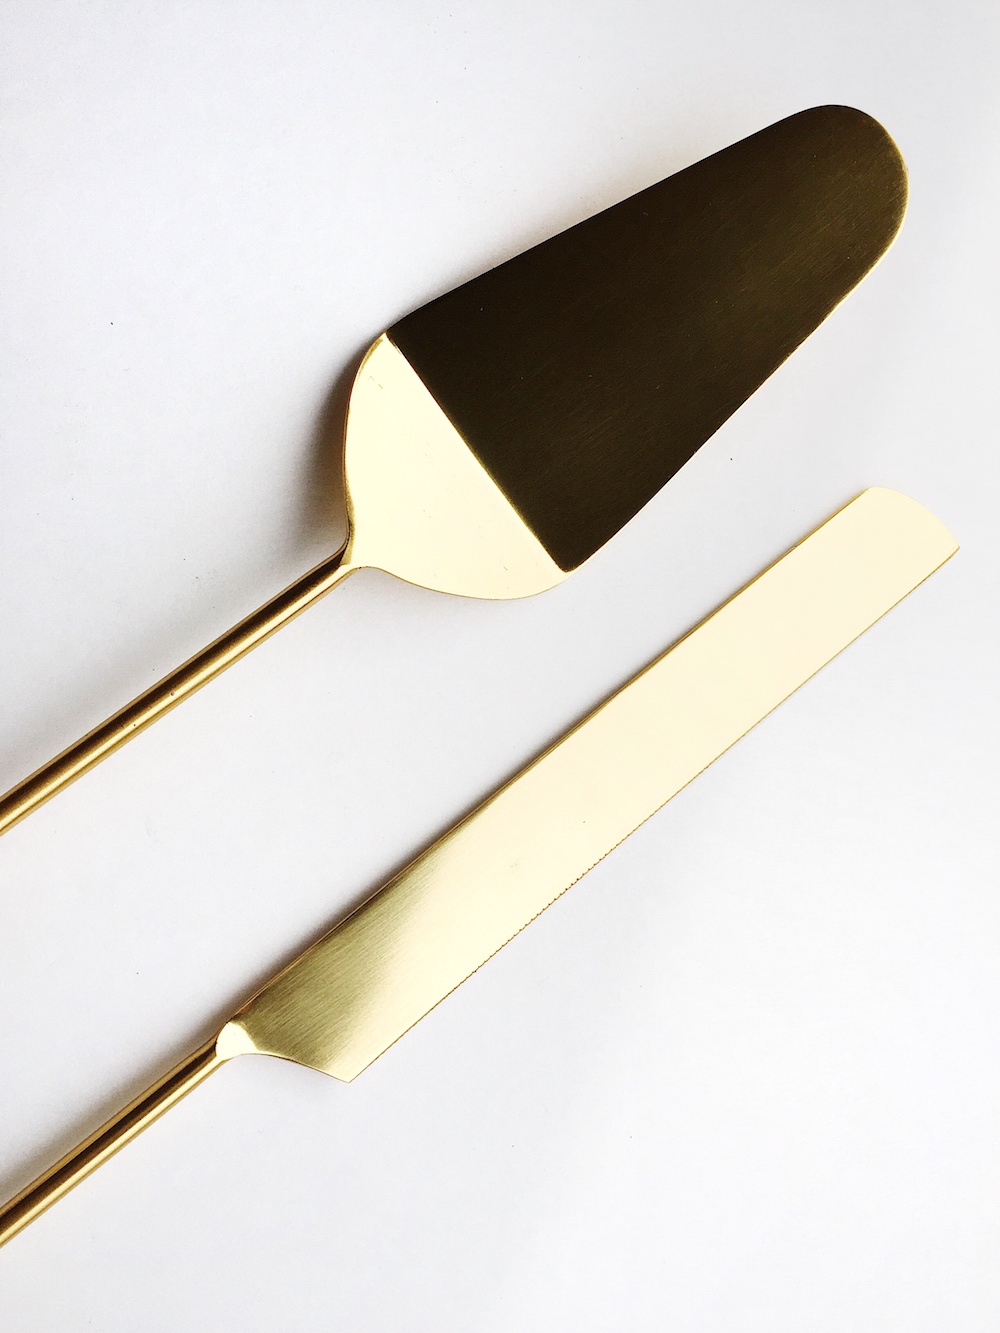  RENTAL  Anthropologie Gold Cake  Knife  Server for your 